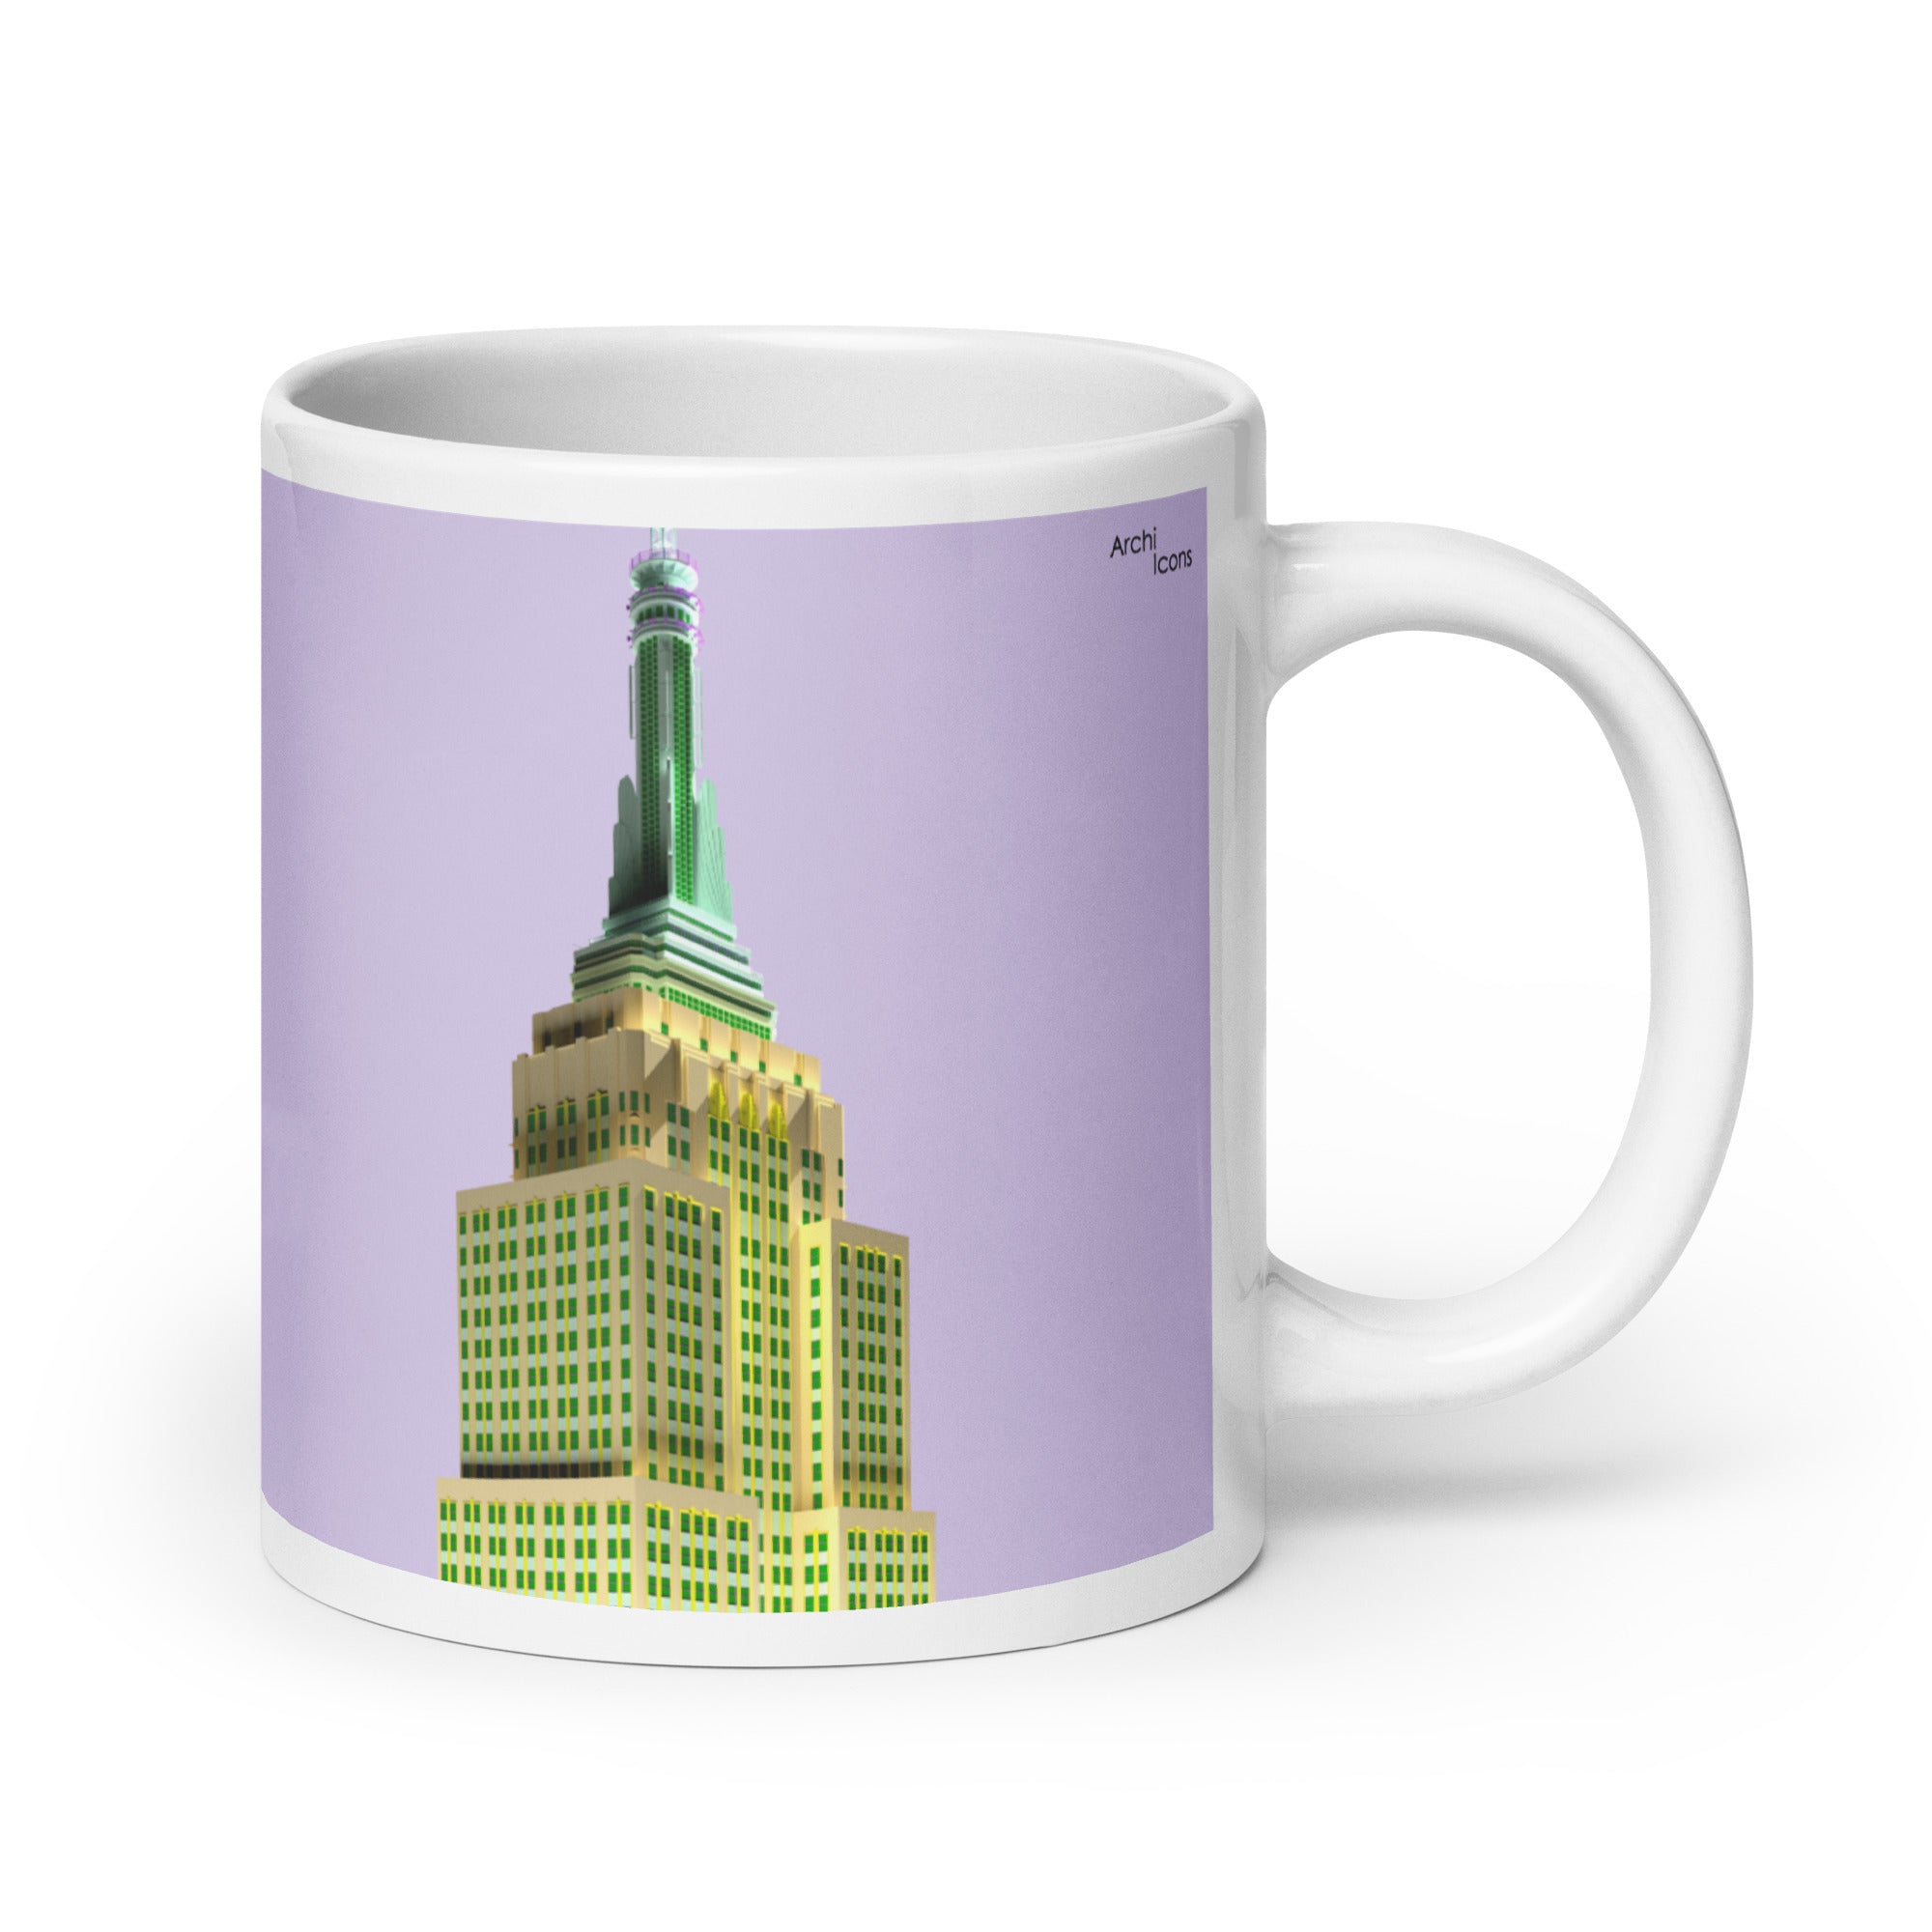 Empire State Building Mugs